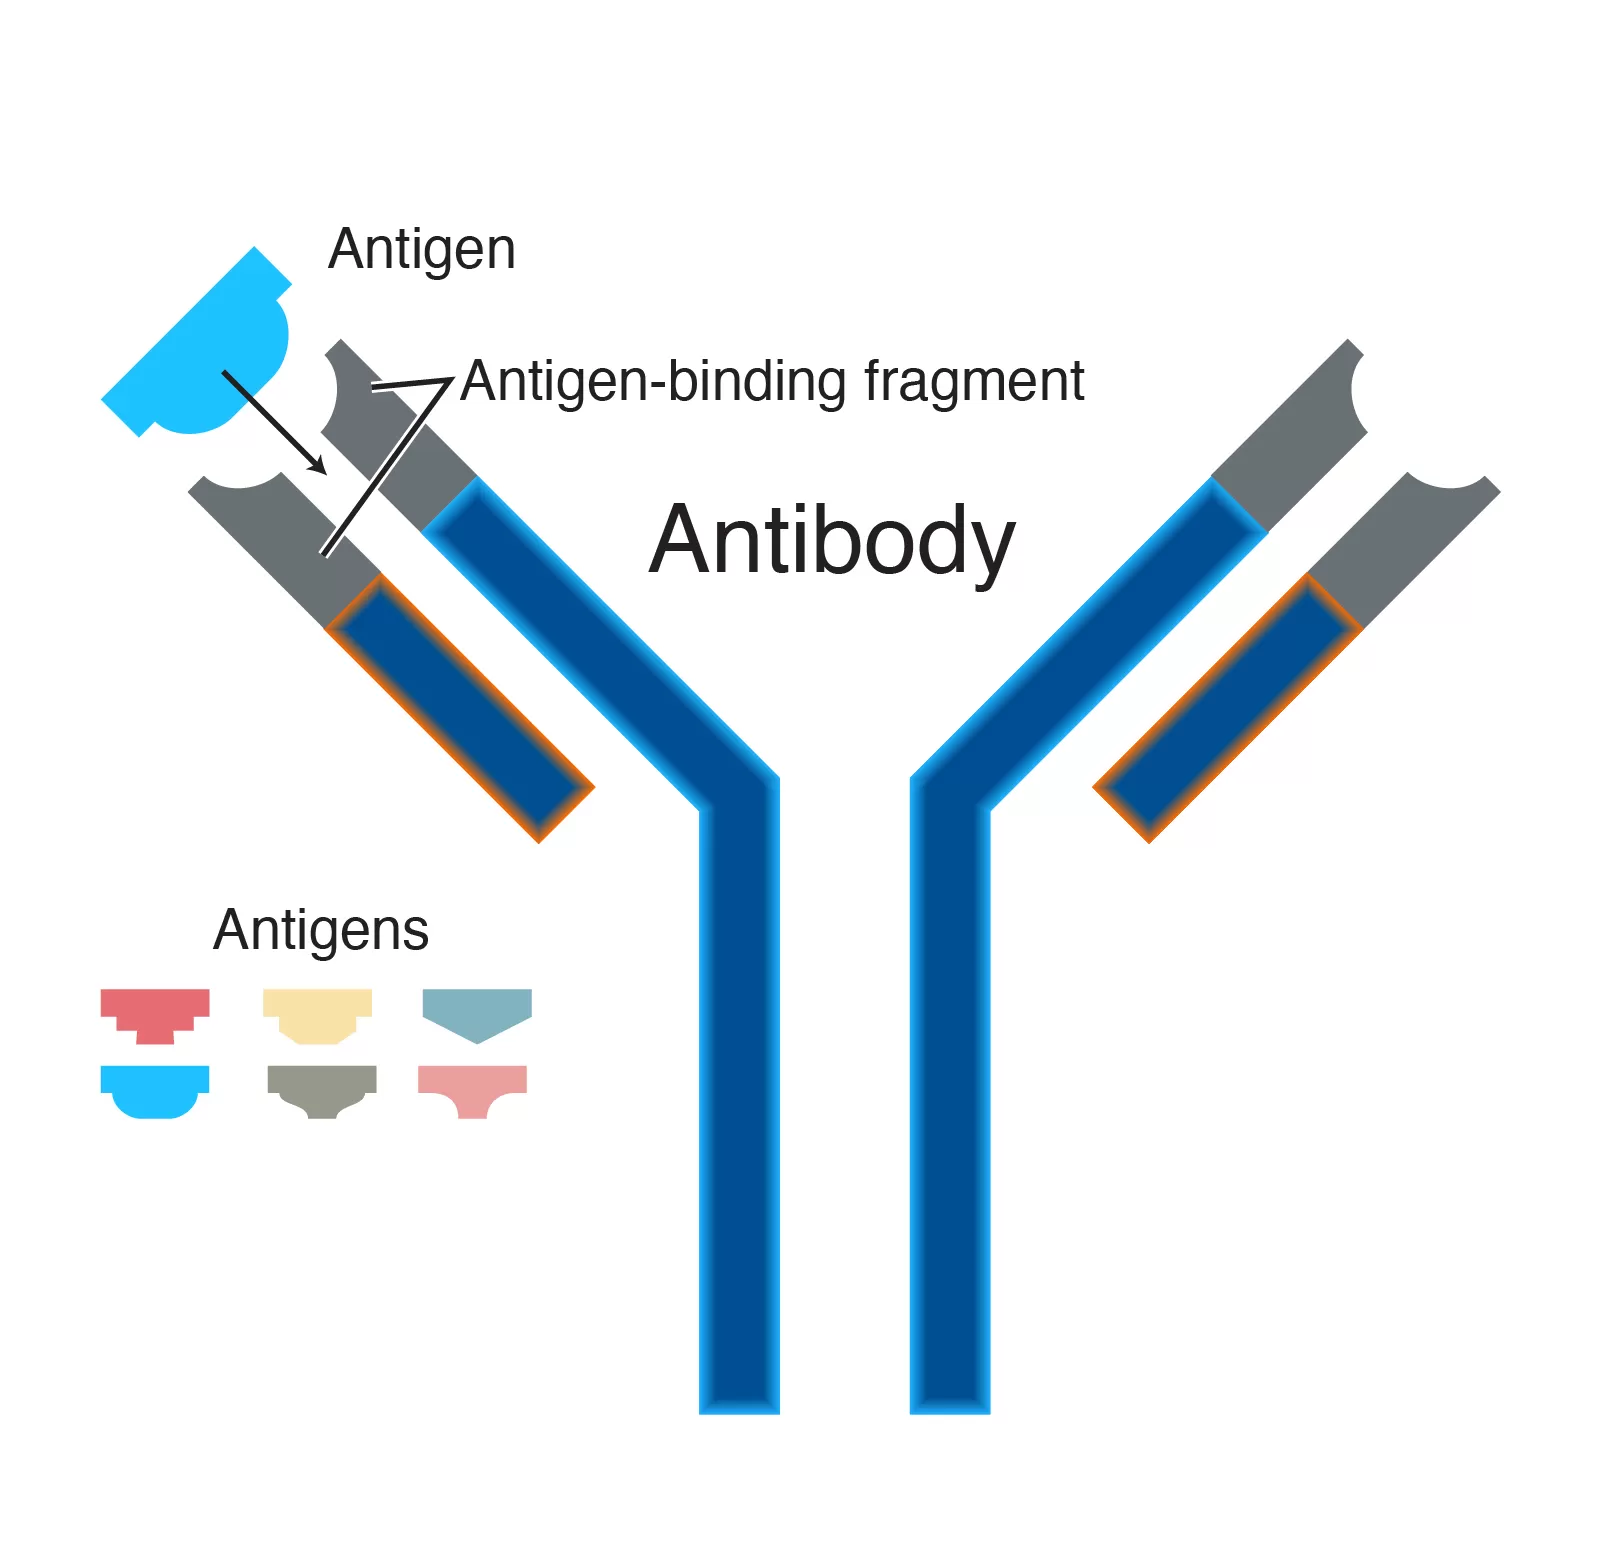 Antibodi